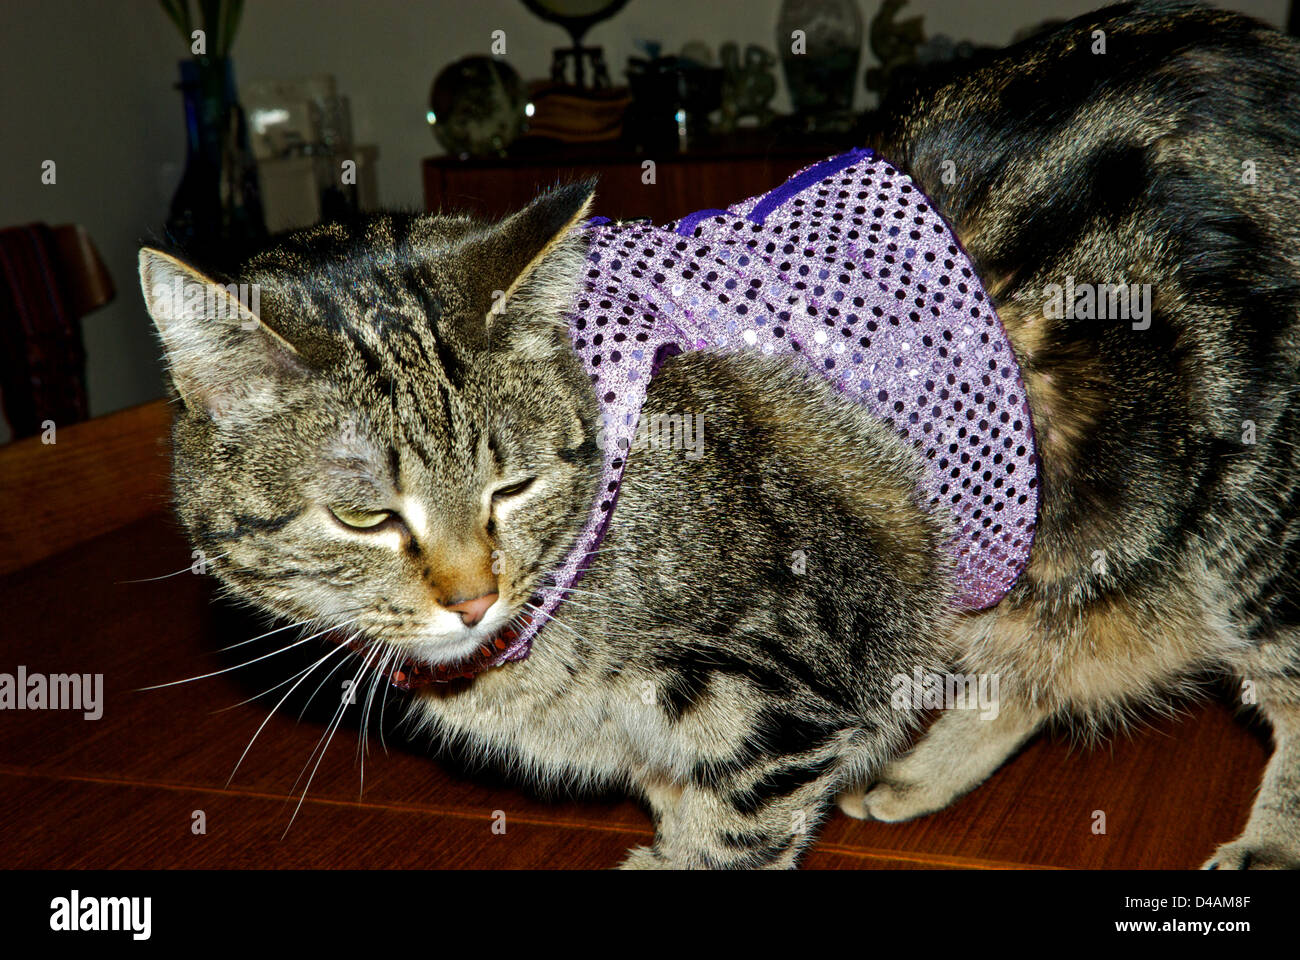 Worried looking shorthair domestic tabby cat wearing new glittery leash vest Stock Photo